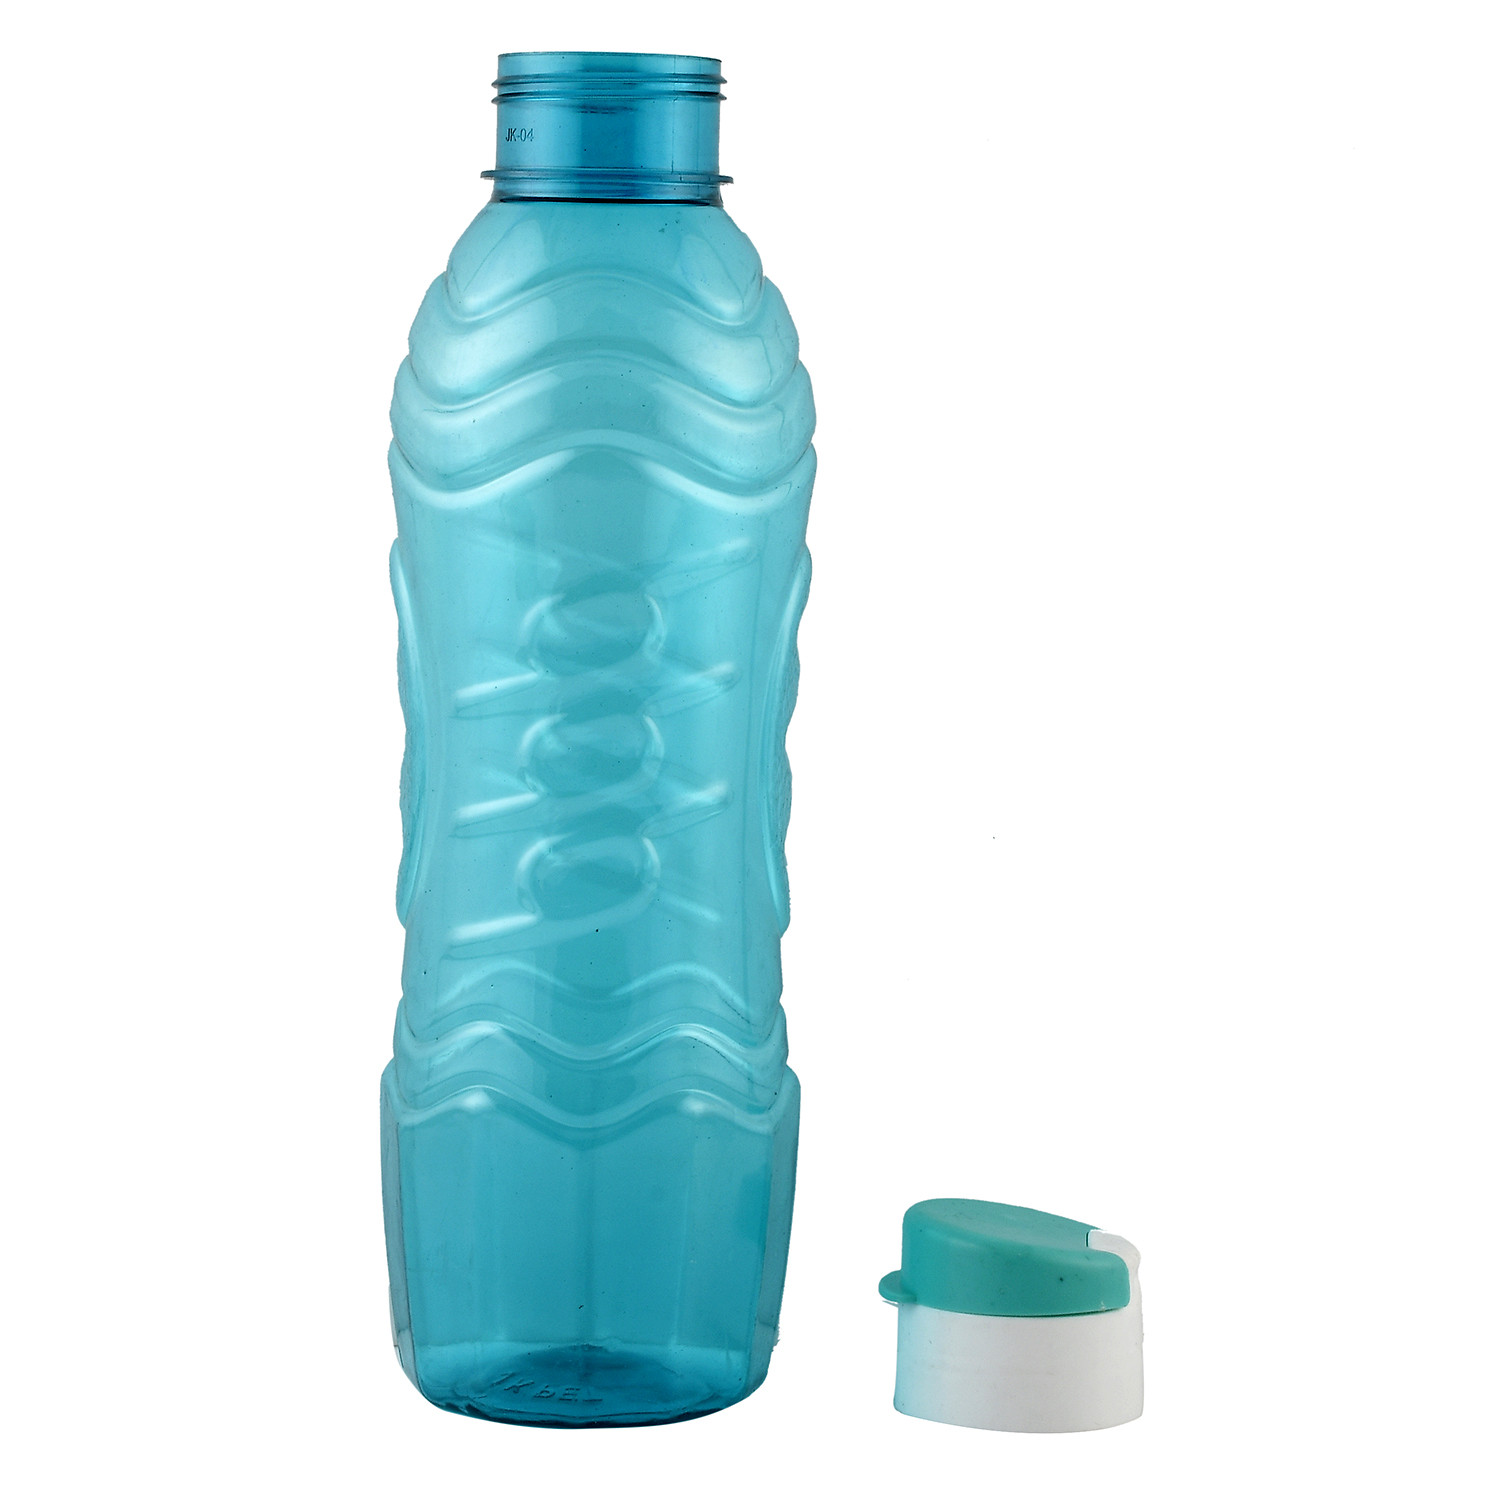 Kuber Industries Plastic Fridge Water Bottle Set with Flip Cap (1000ml, Blue & Green & Sky Blue)-KUBMART1510